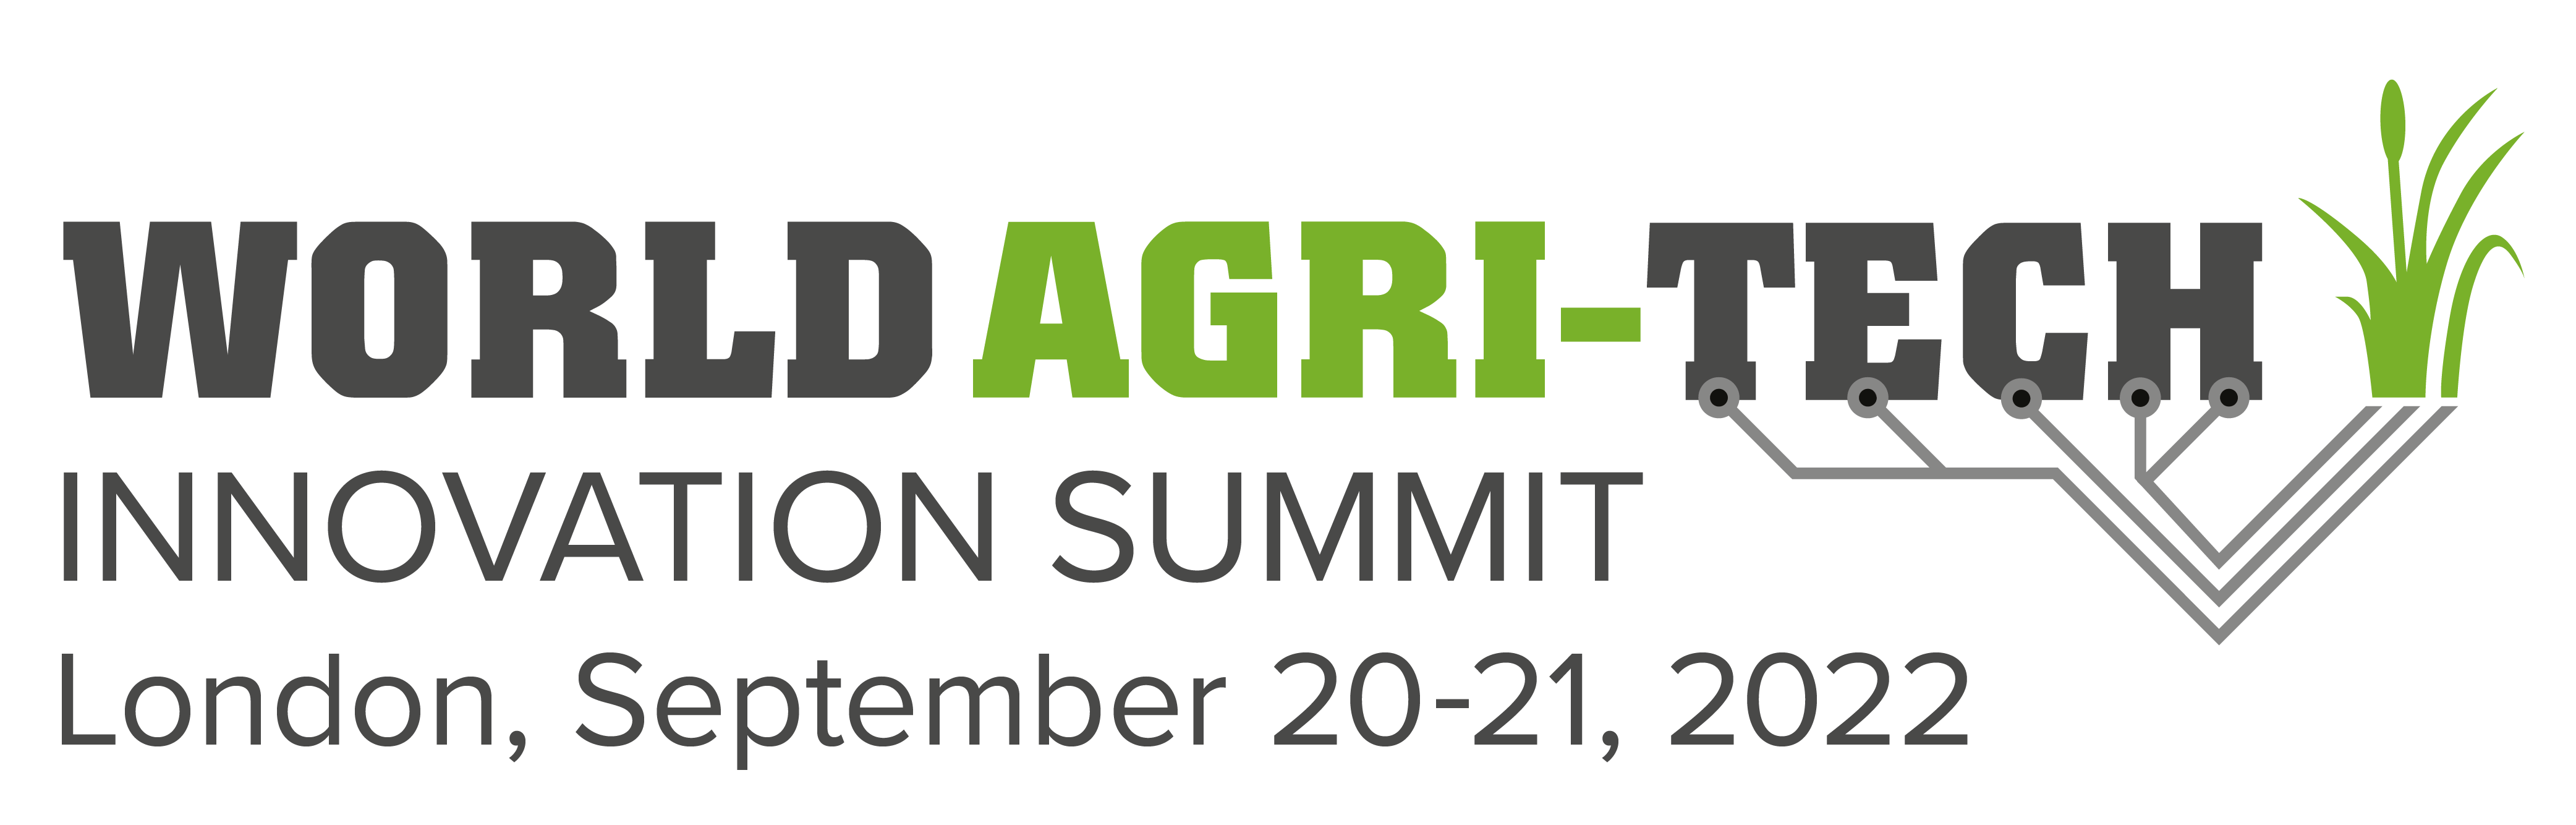 world-agri-tech-london-sept-2022-logo